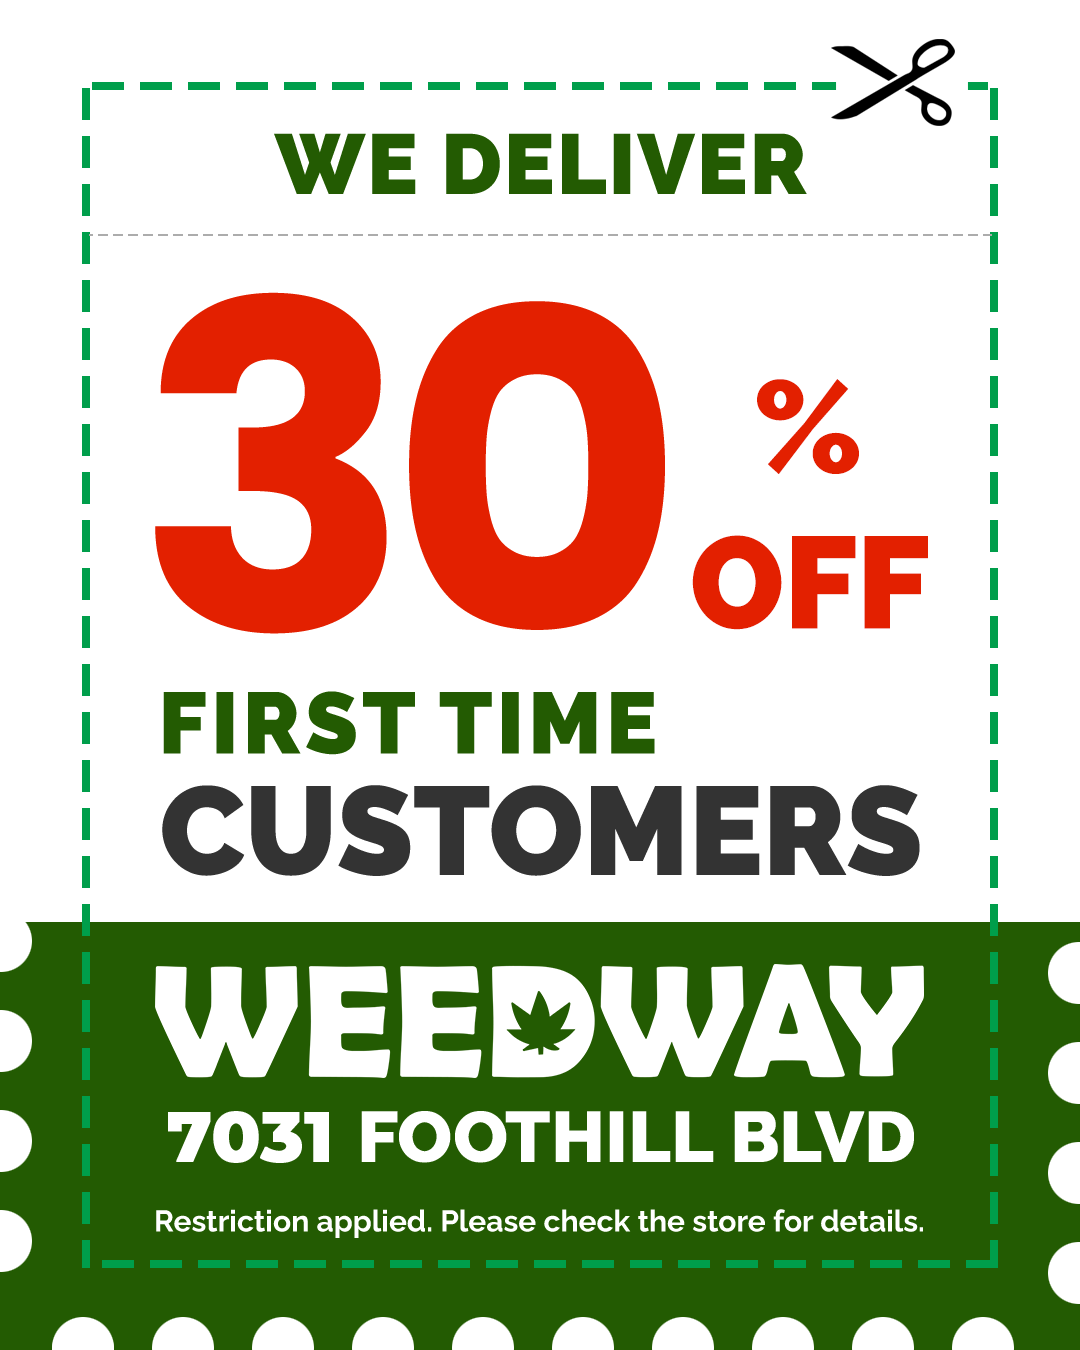 weedway-coupon1